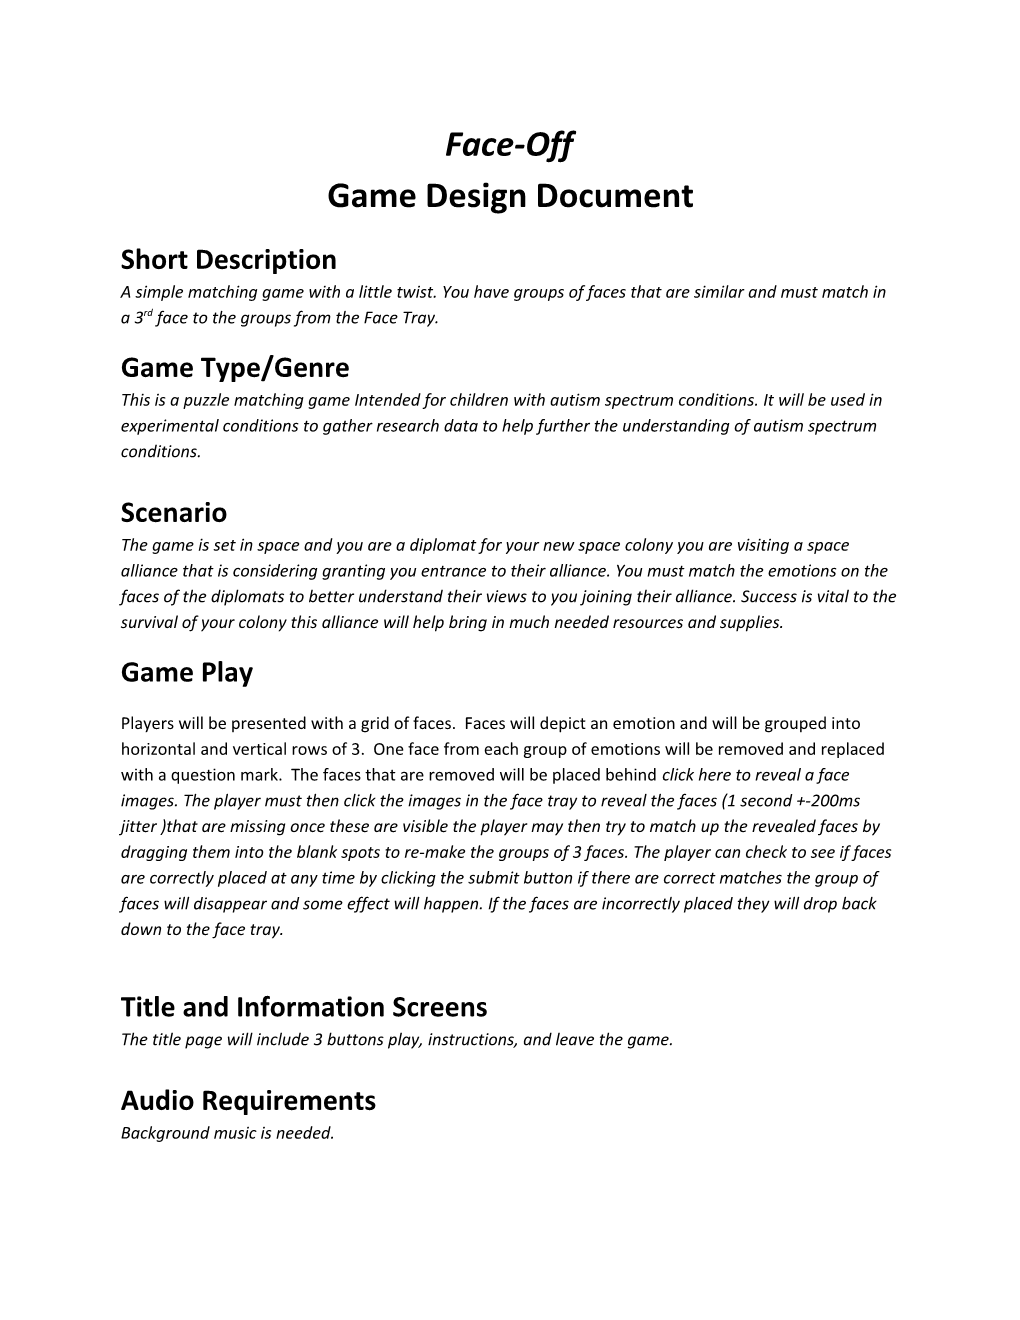 Face-Off Game Design Document